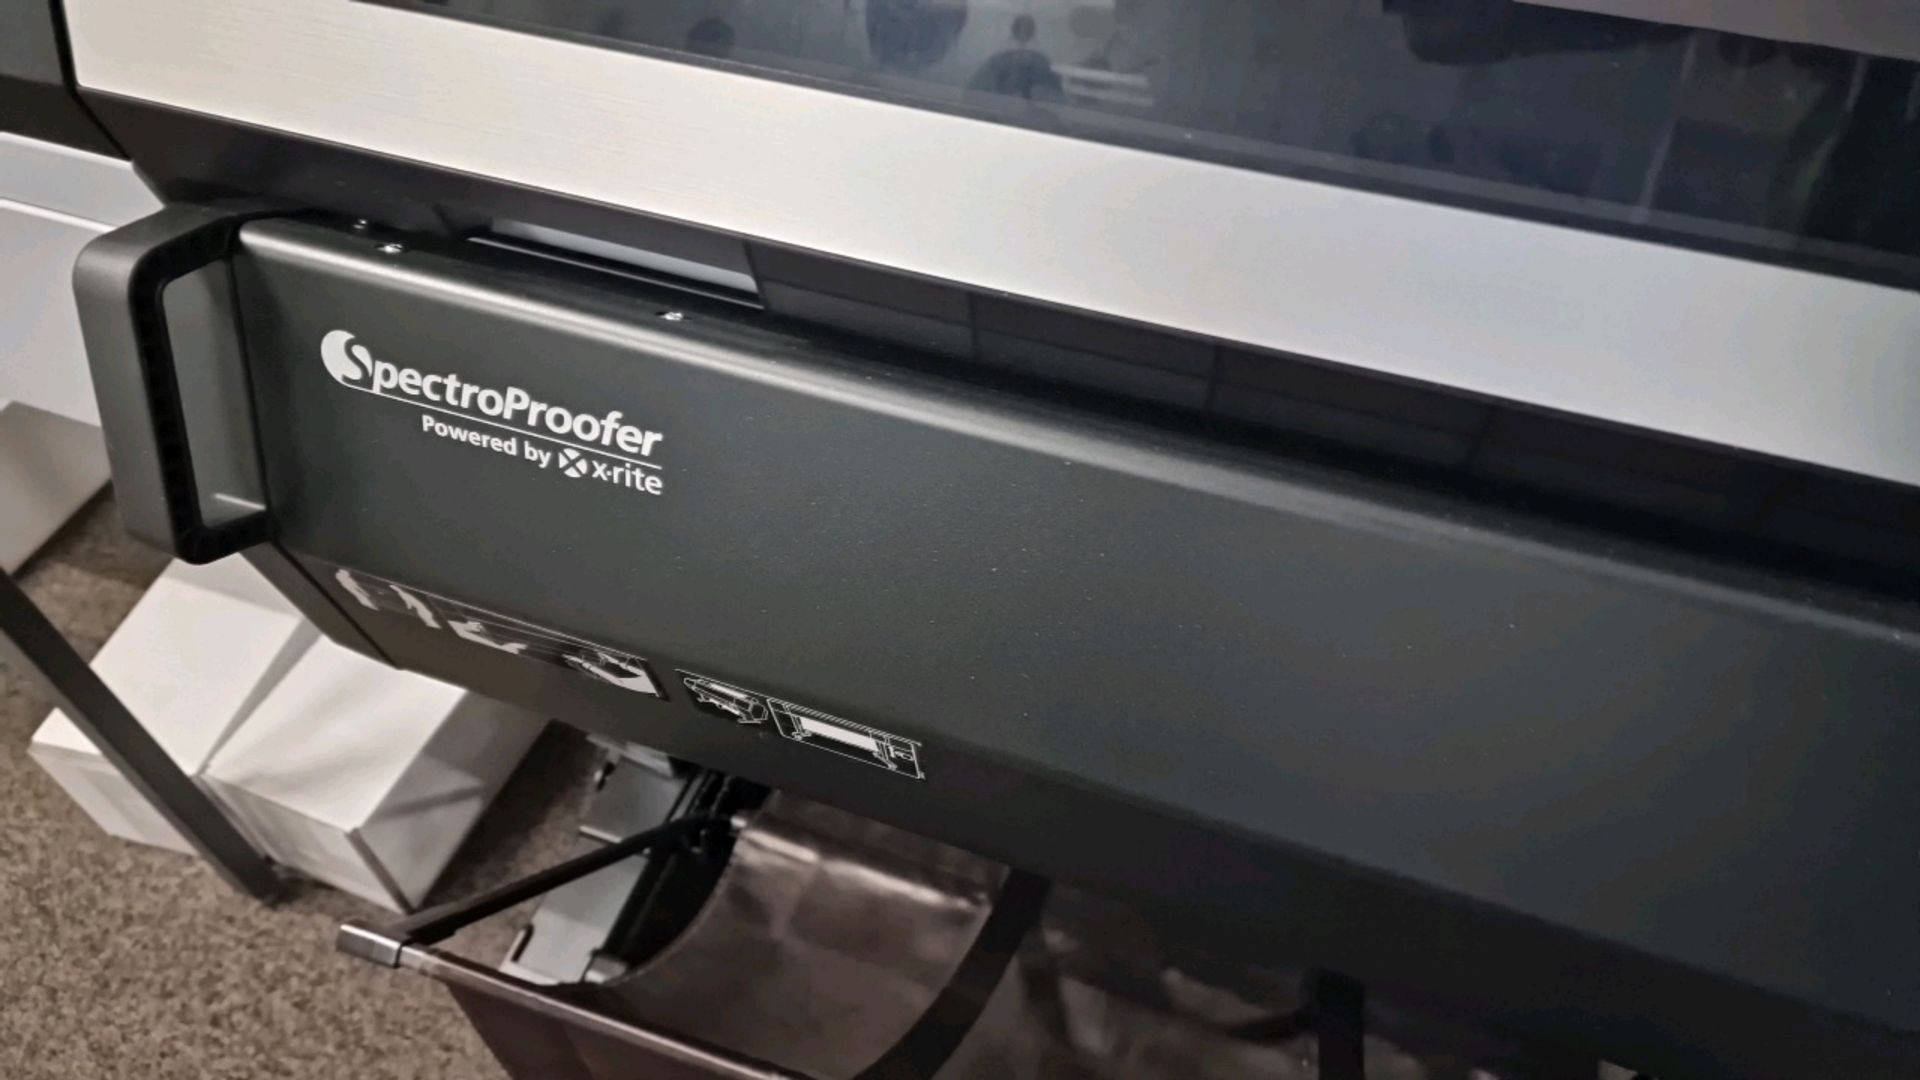 Epson Spectro Proofer Printer - Bild 6 aus 10